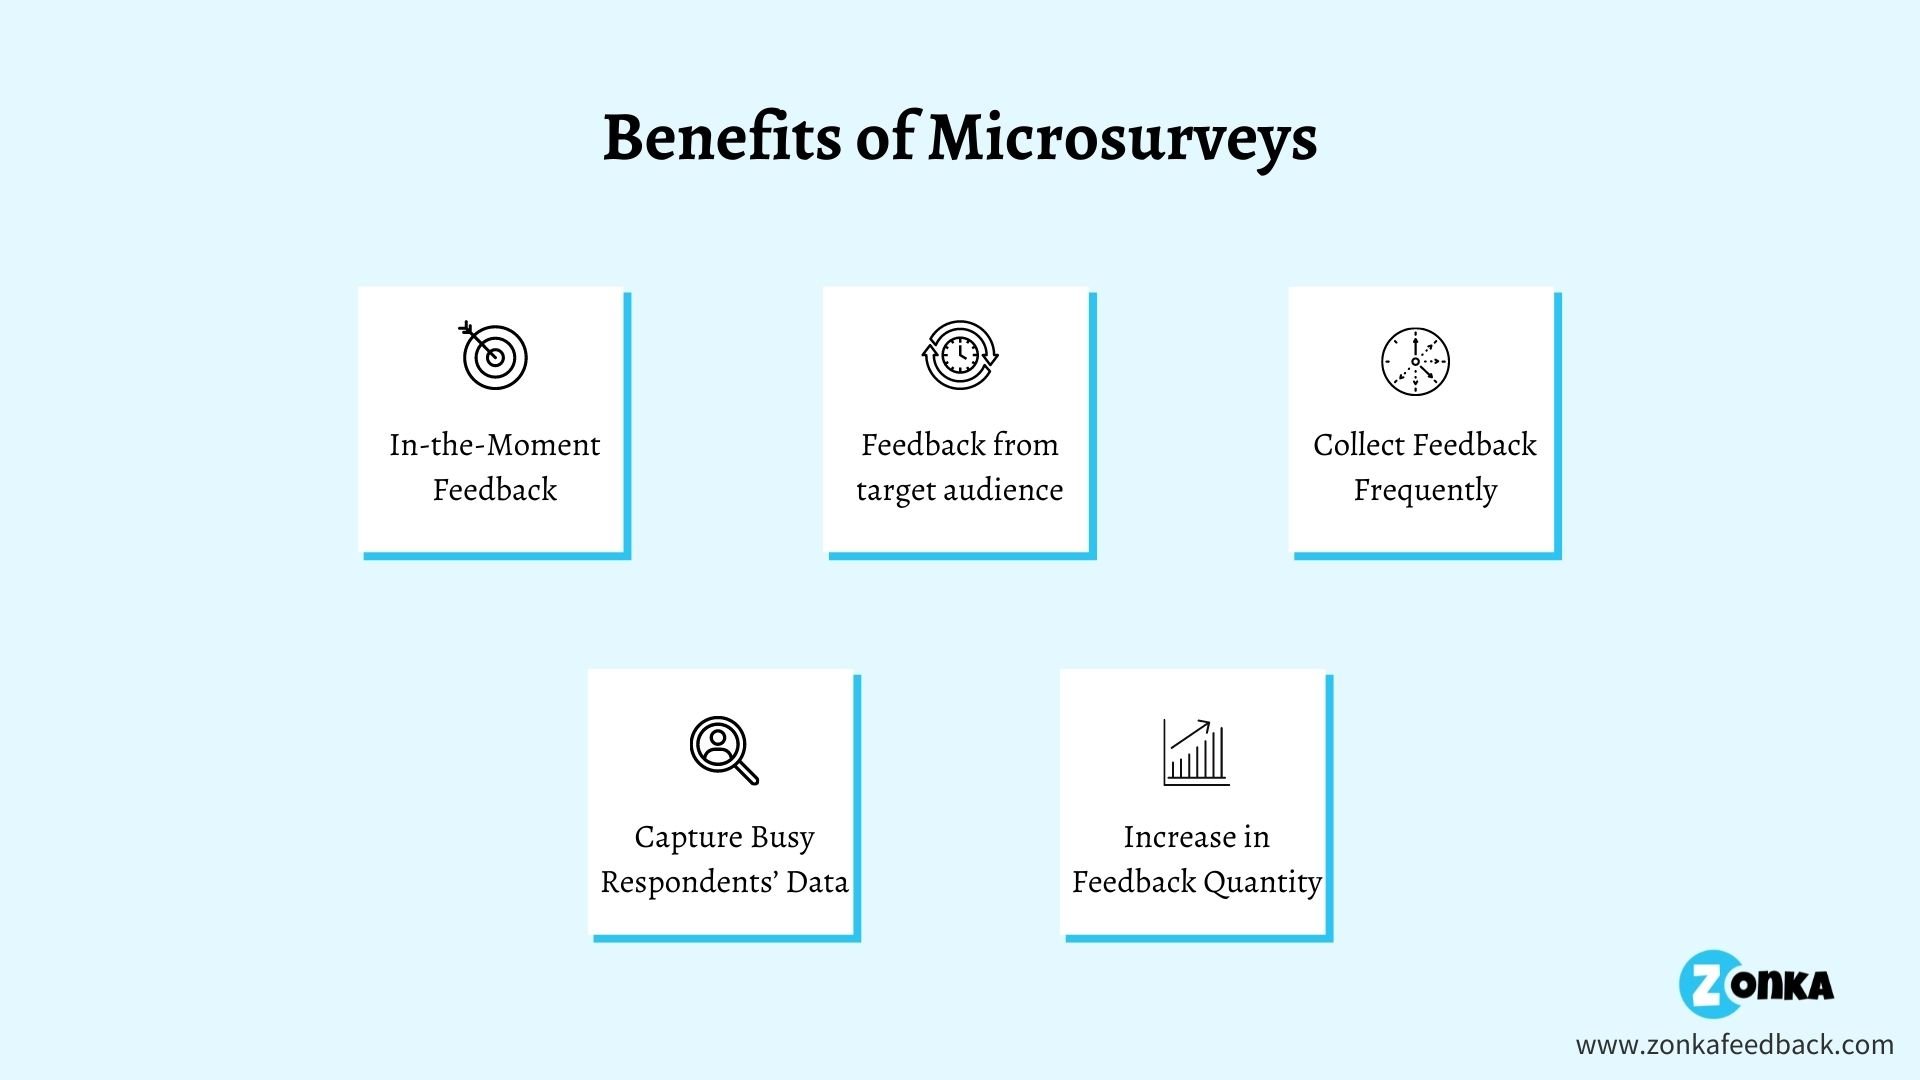 Benefits of a Microsurvey